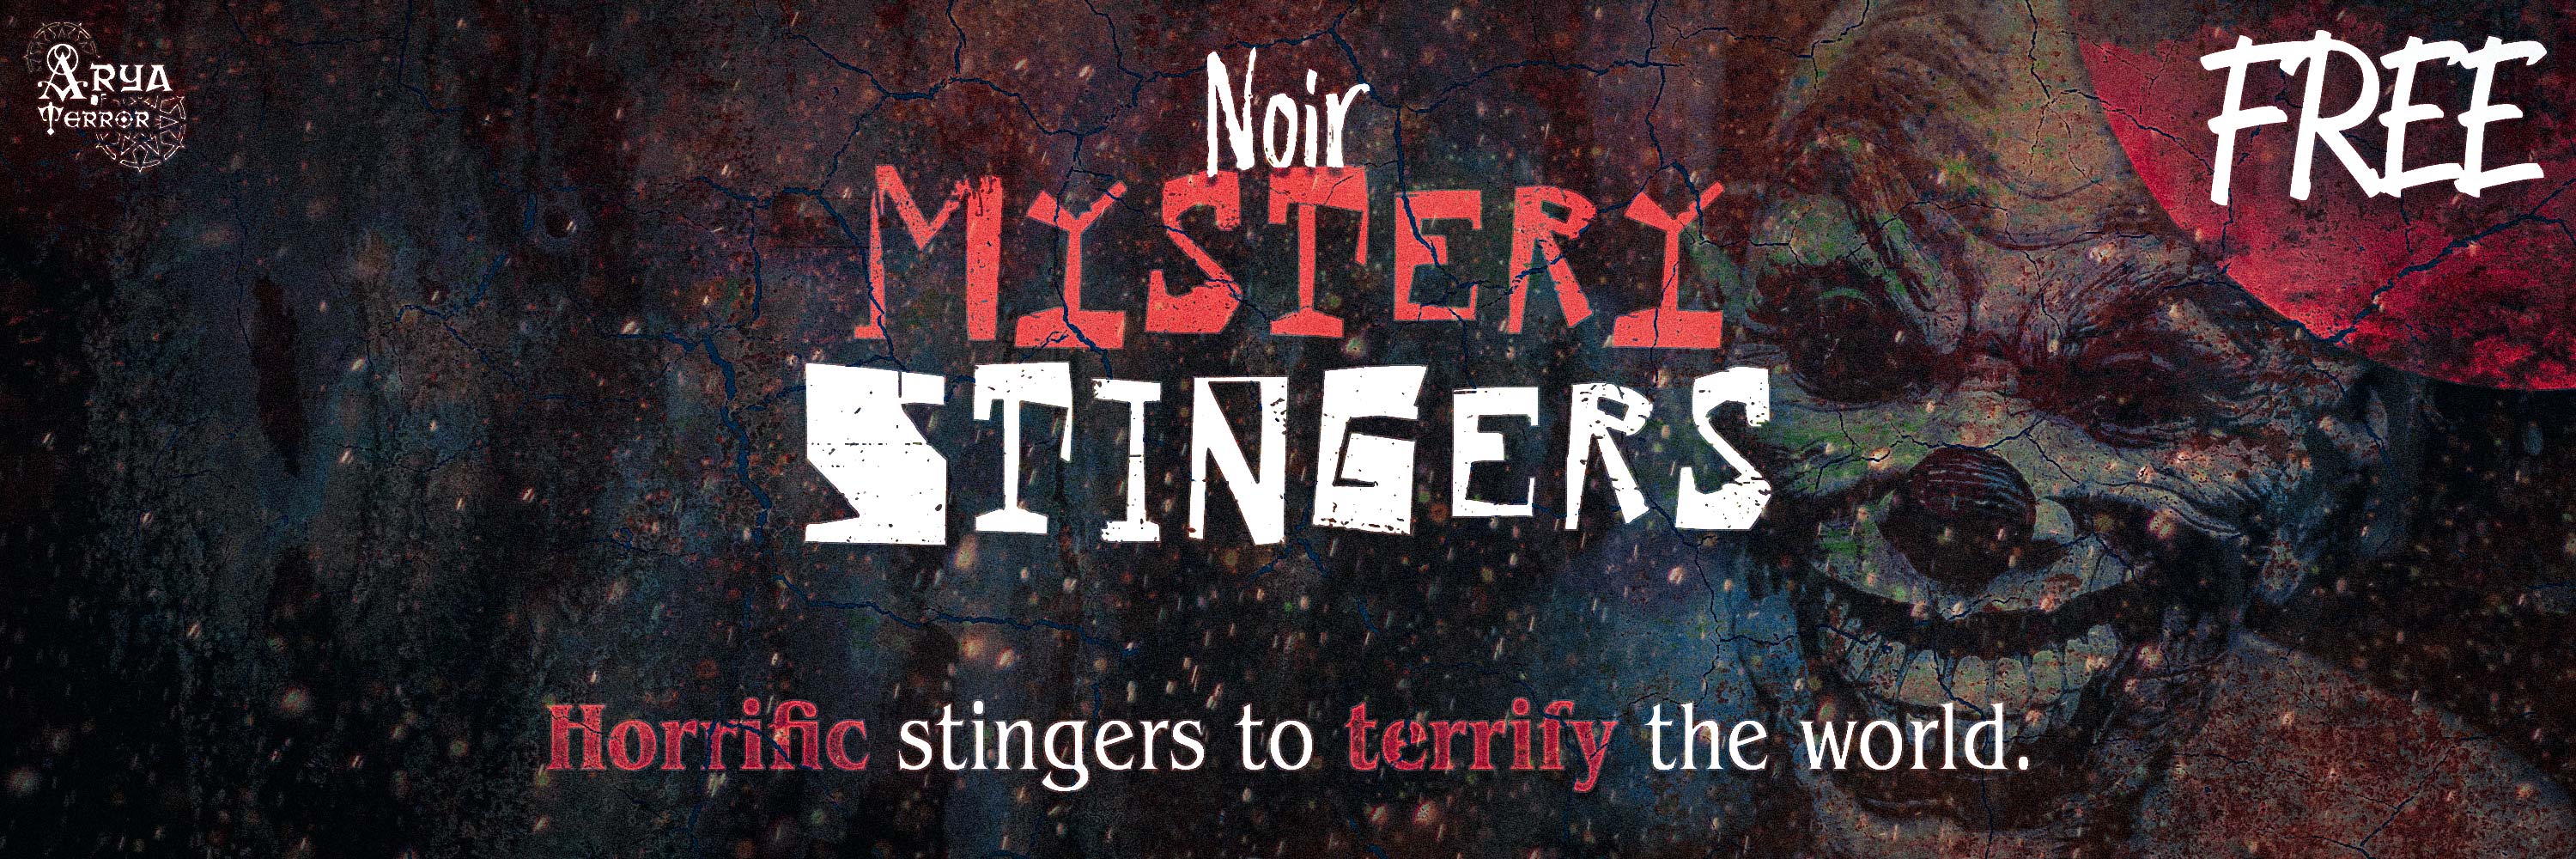 FREE Noir Mystery Stingers